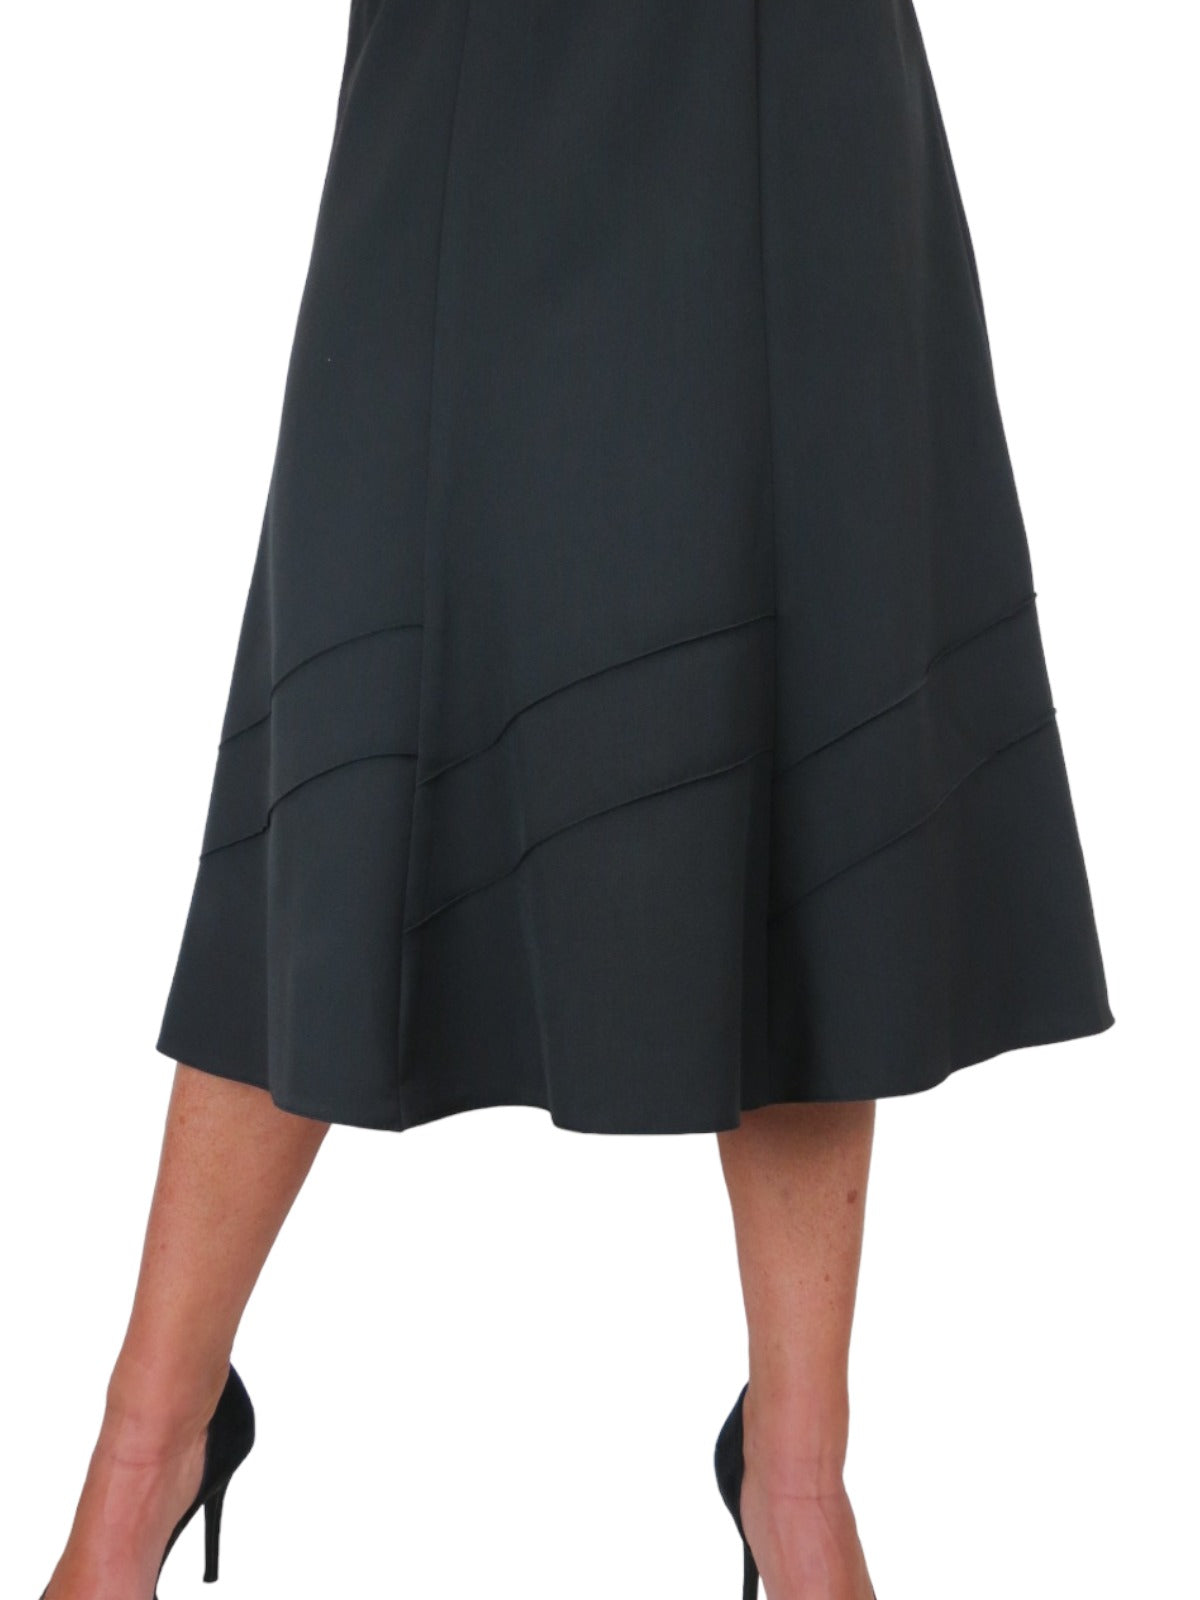 Smart Fully Lined A Line Skirt Elasticated Waist 30" Long Black